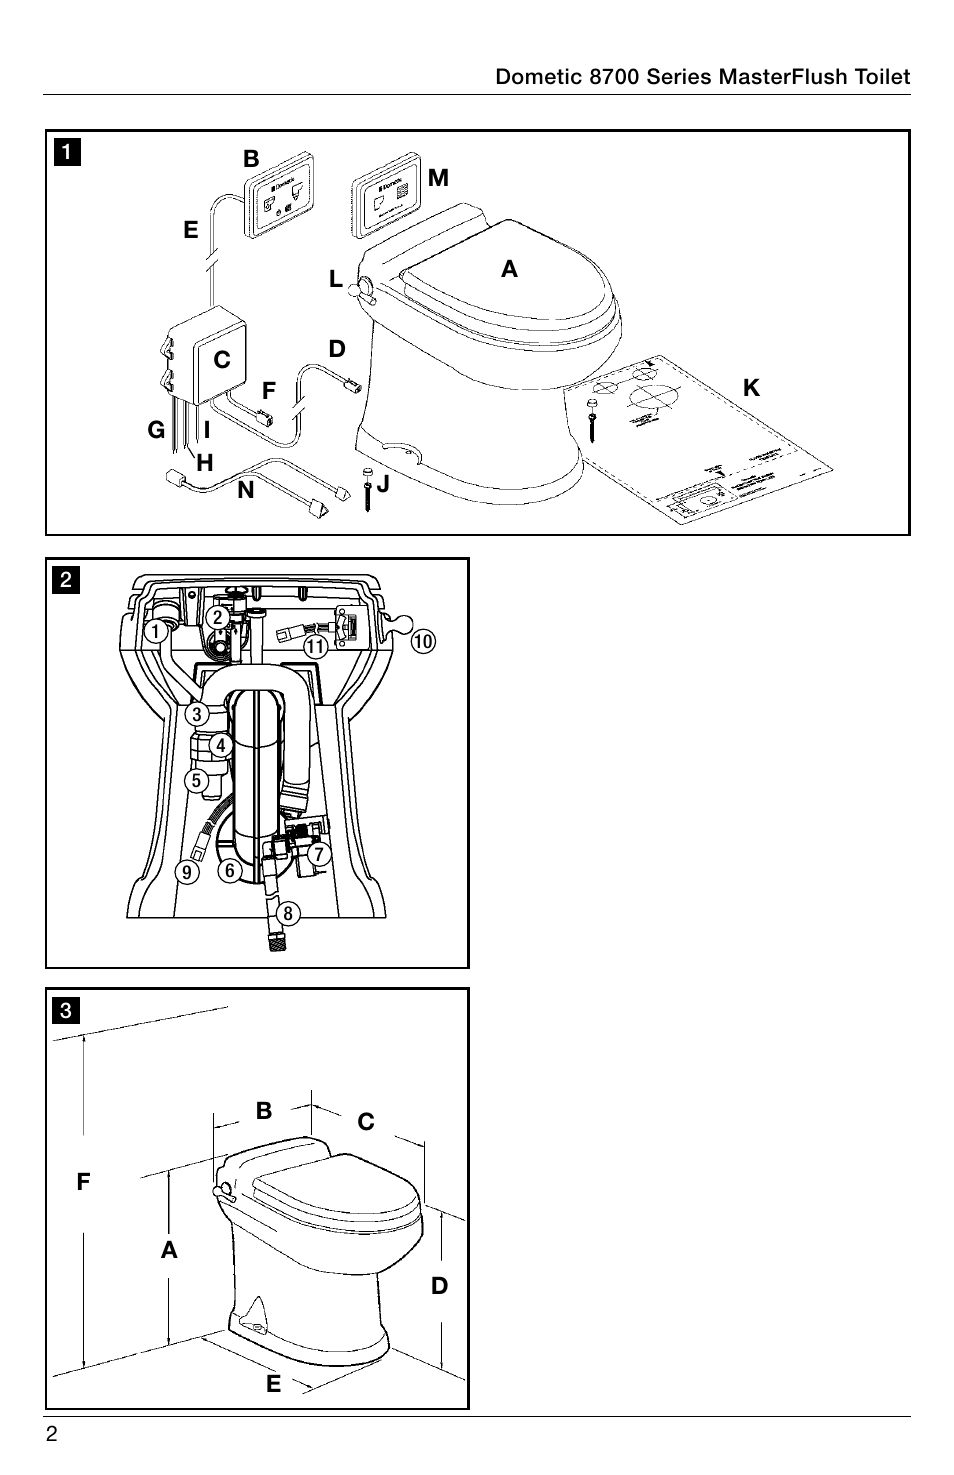 sealand-8700-series-masterflush-toilet-operation-manual-user-manual-page-2-12